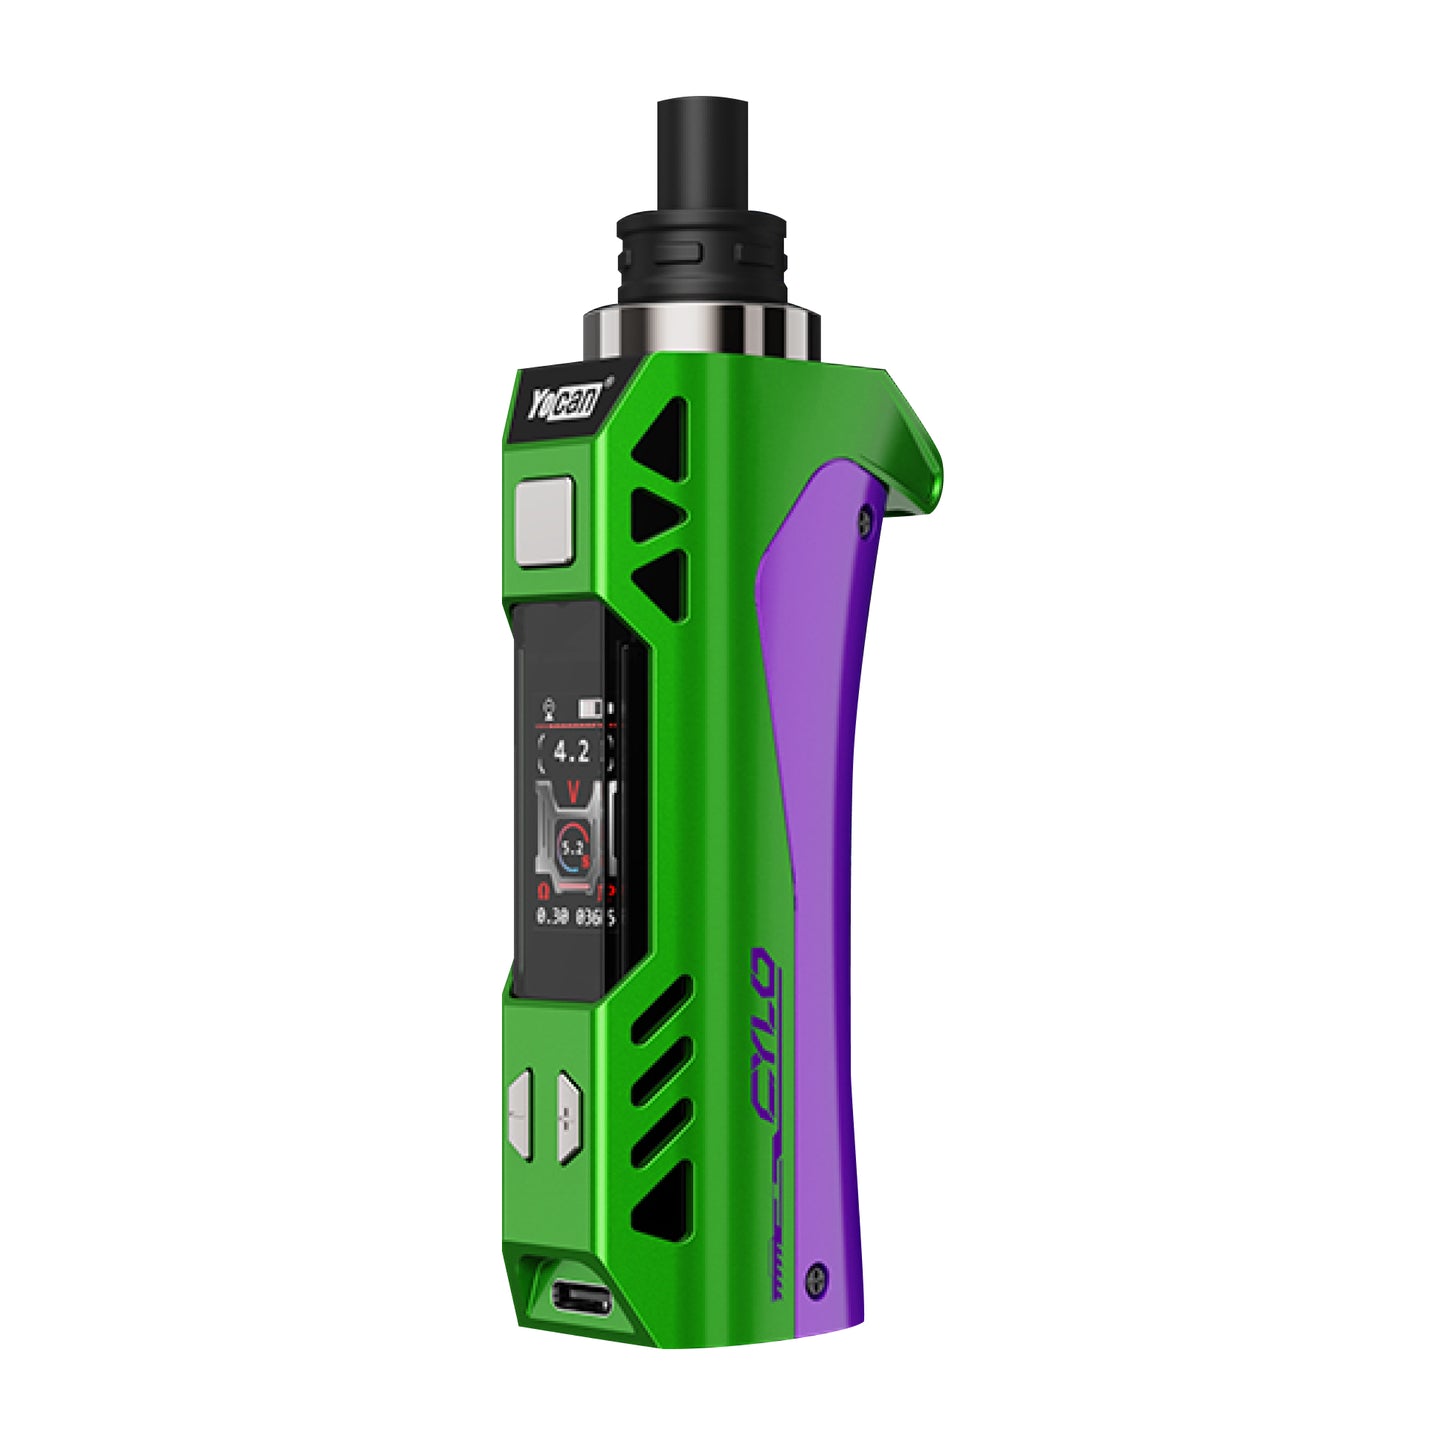 Yocan Cylo Wax Vaporizer - green-purple